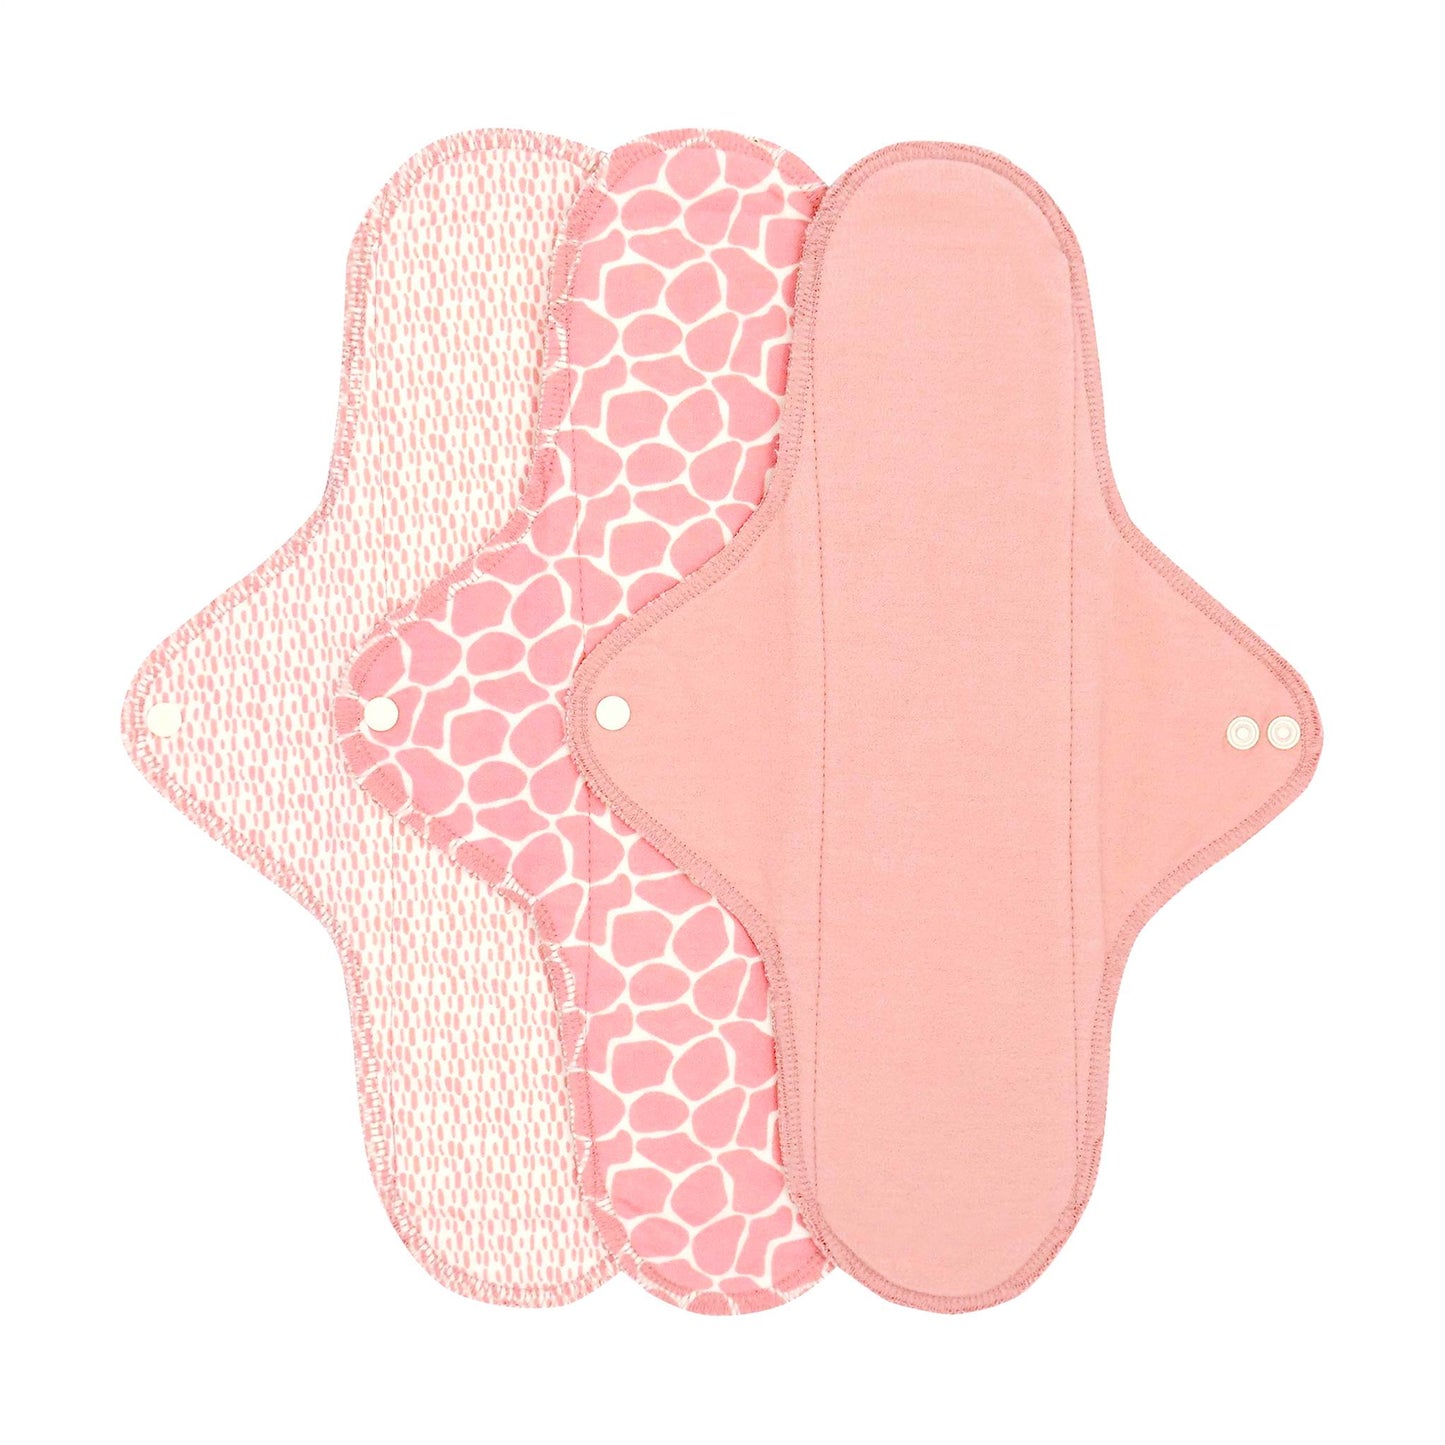 Imse Vimse Period Care Blossom Pink Reusable Cloth Sanitary Pad - Night- 3pk - Imse Vimse